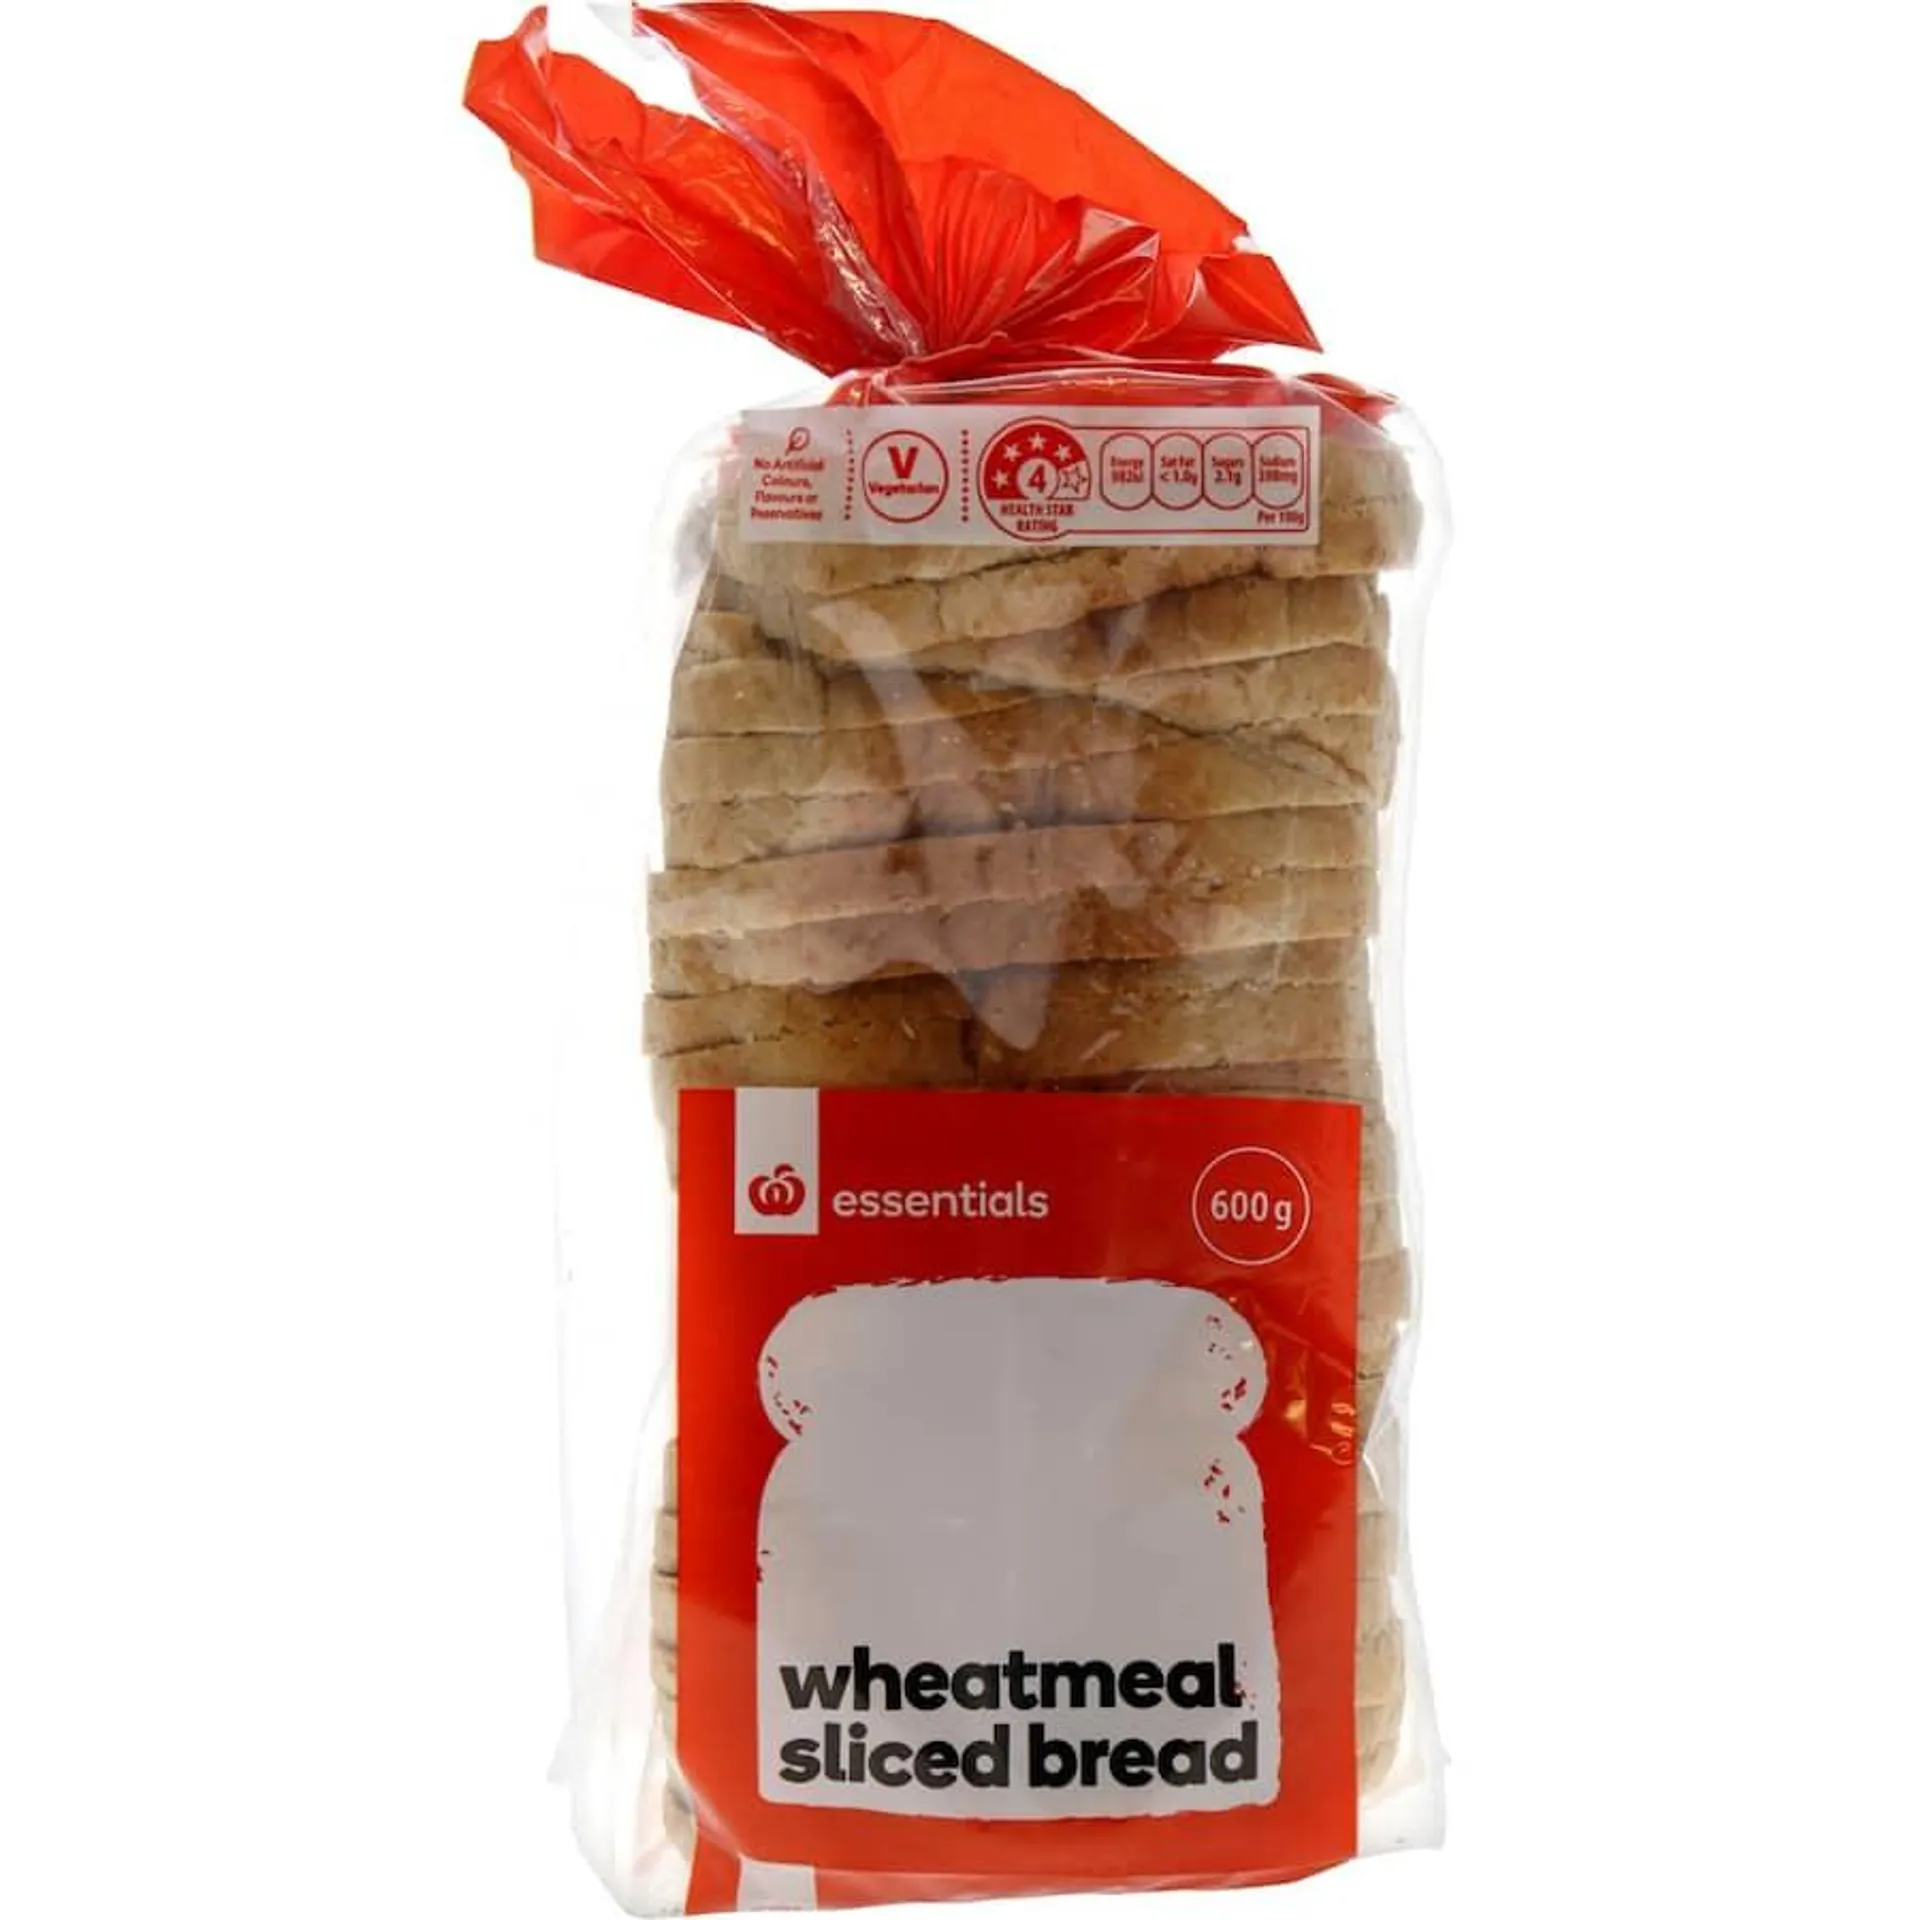 Essentials Sliced Bread Wheatmeal